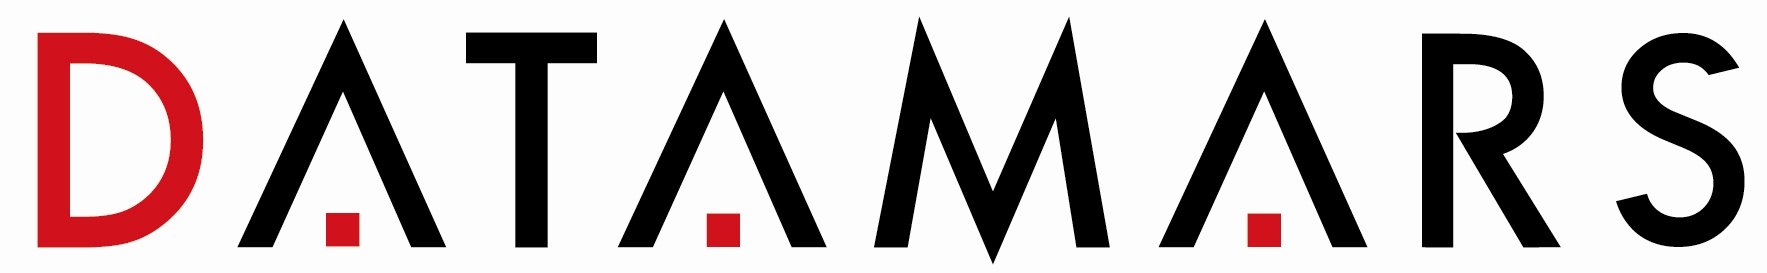 DATAMARS logo